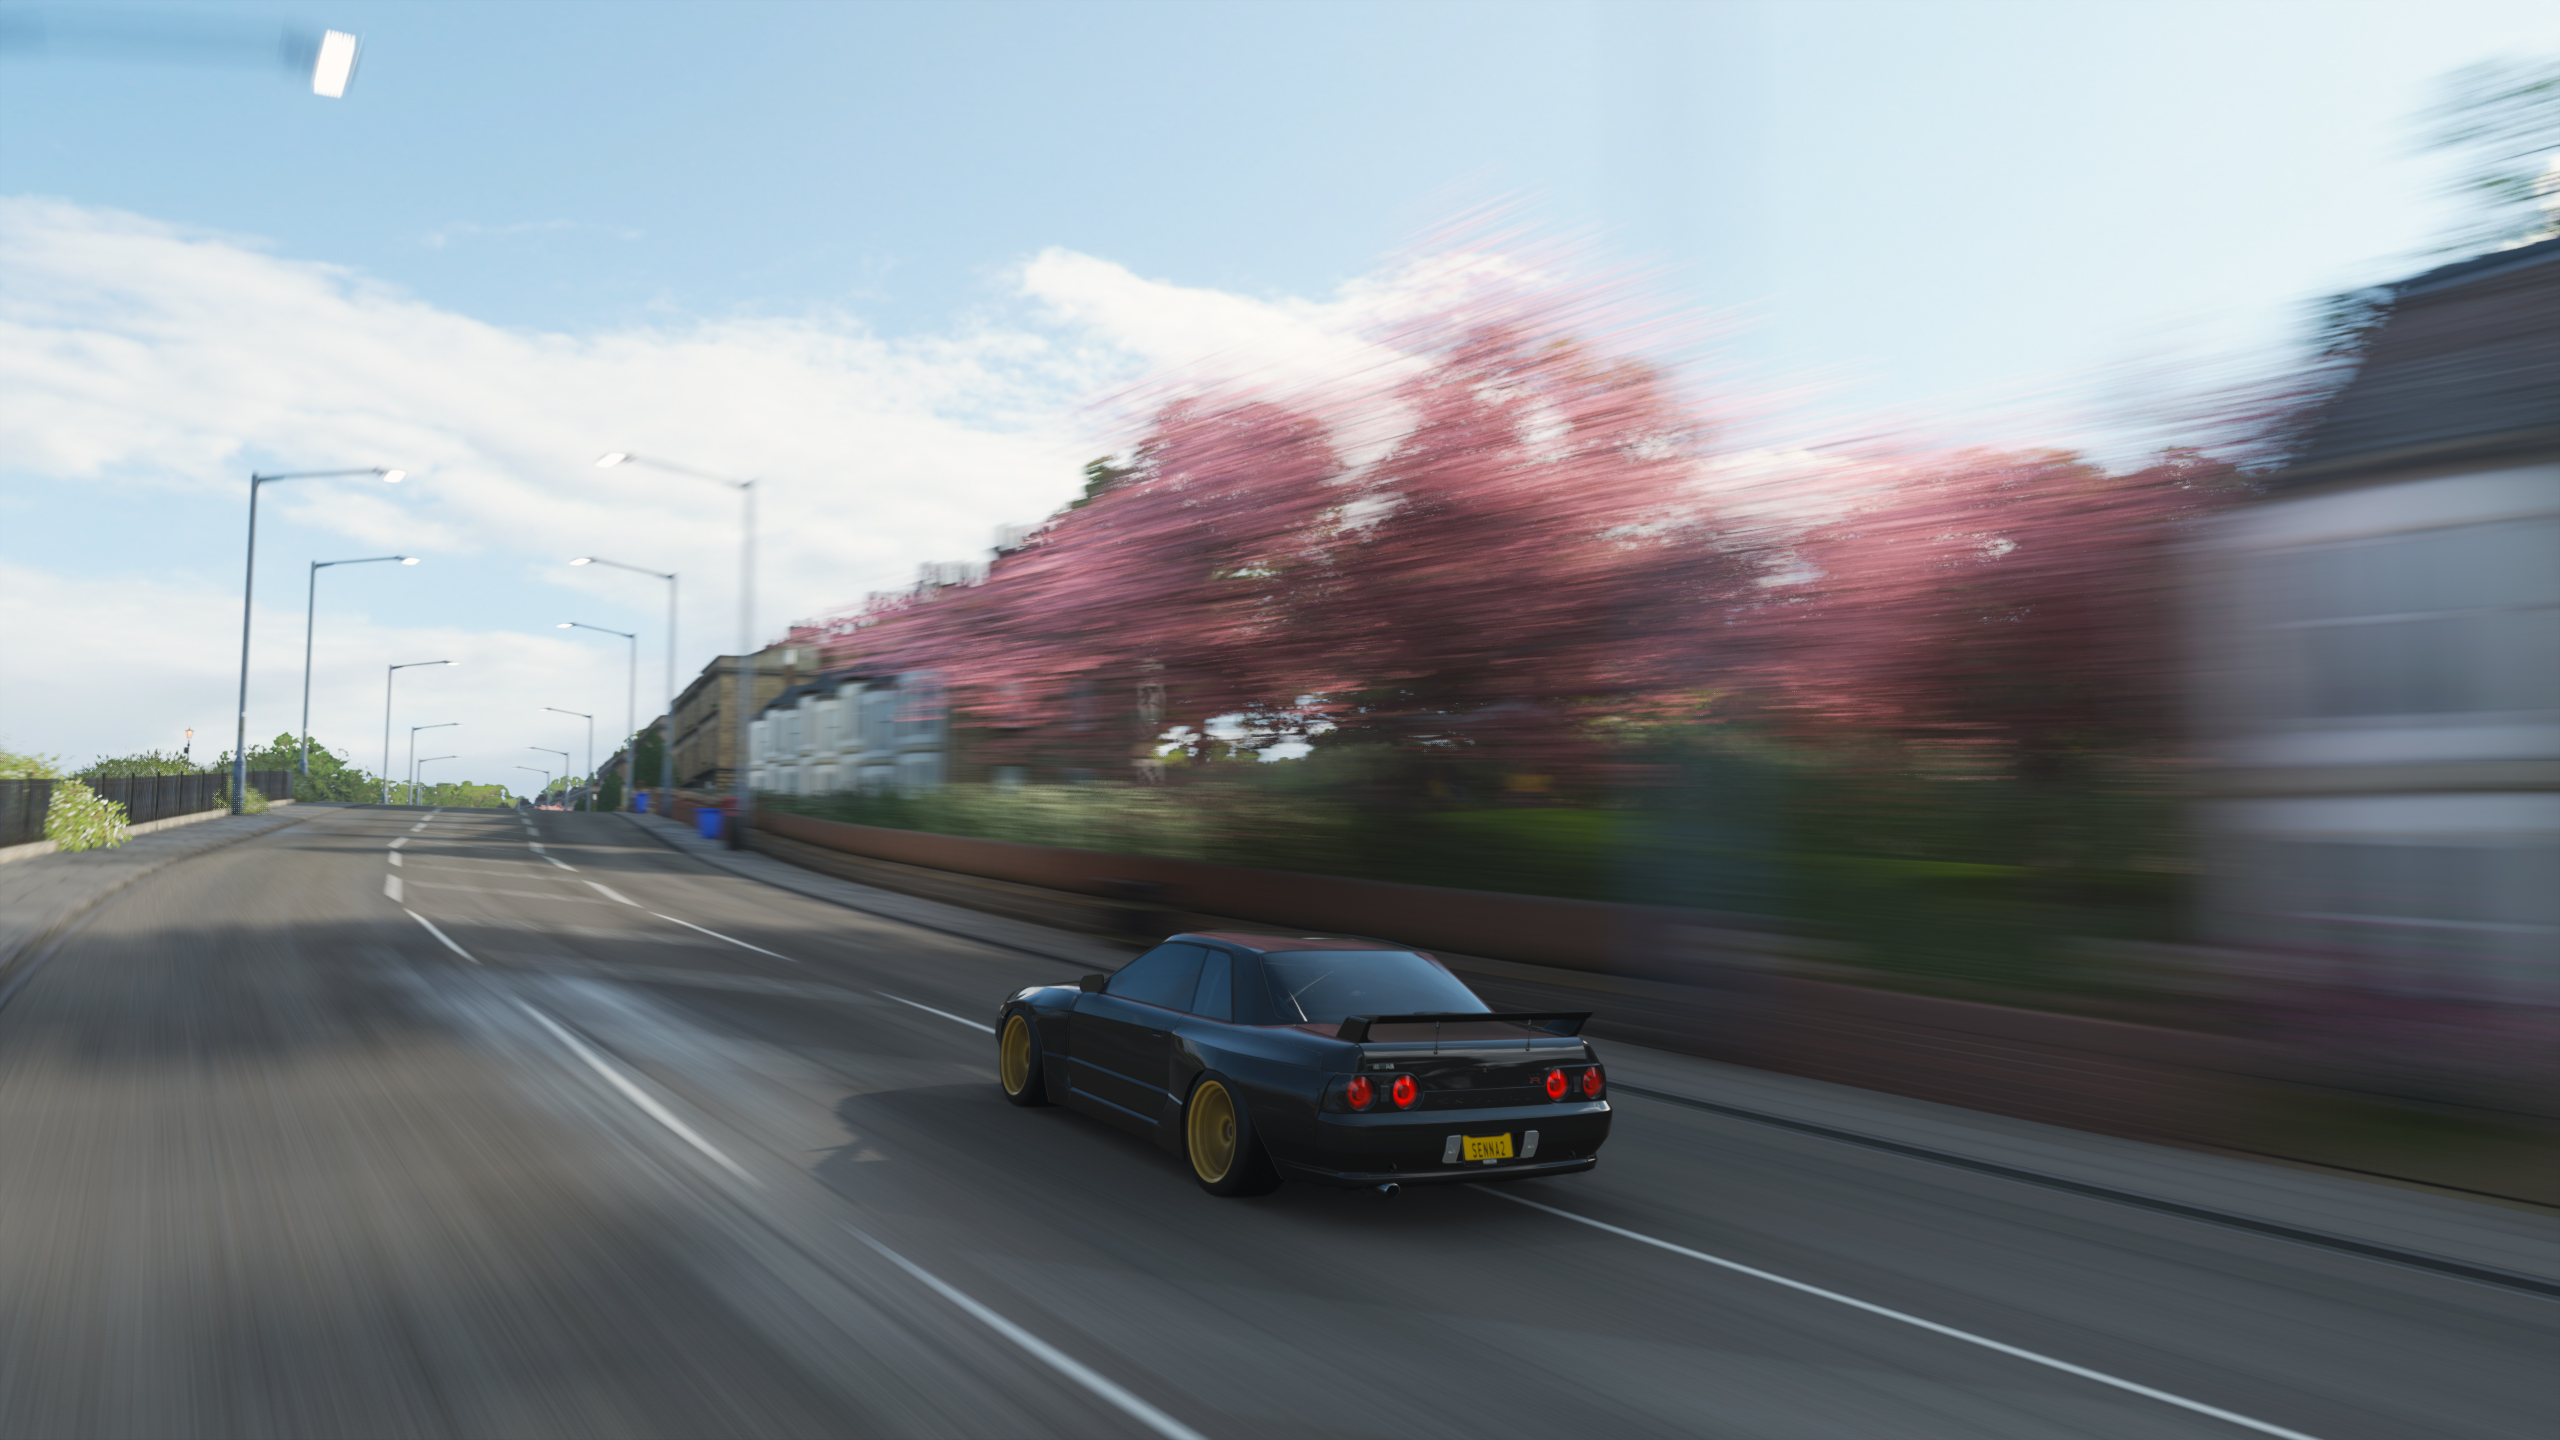 NissanSkylineR32 SkylineR32 SakuraWithR32 Forza Horizon 4 Car Video Games Road 2560x1440